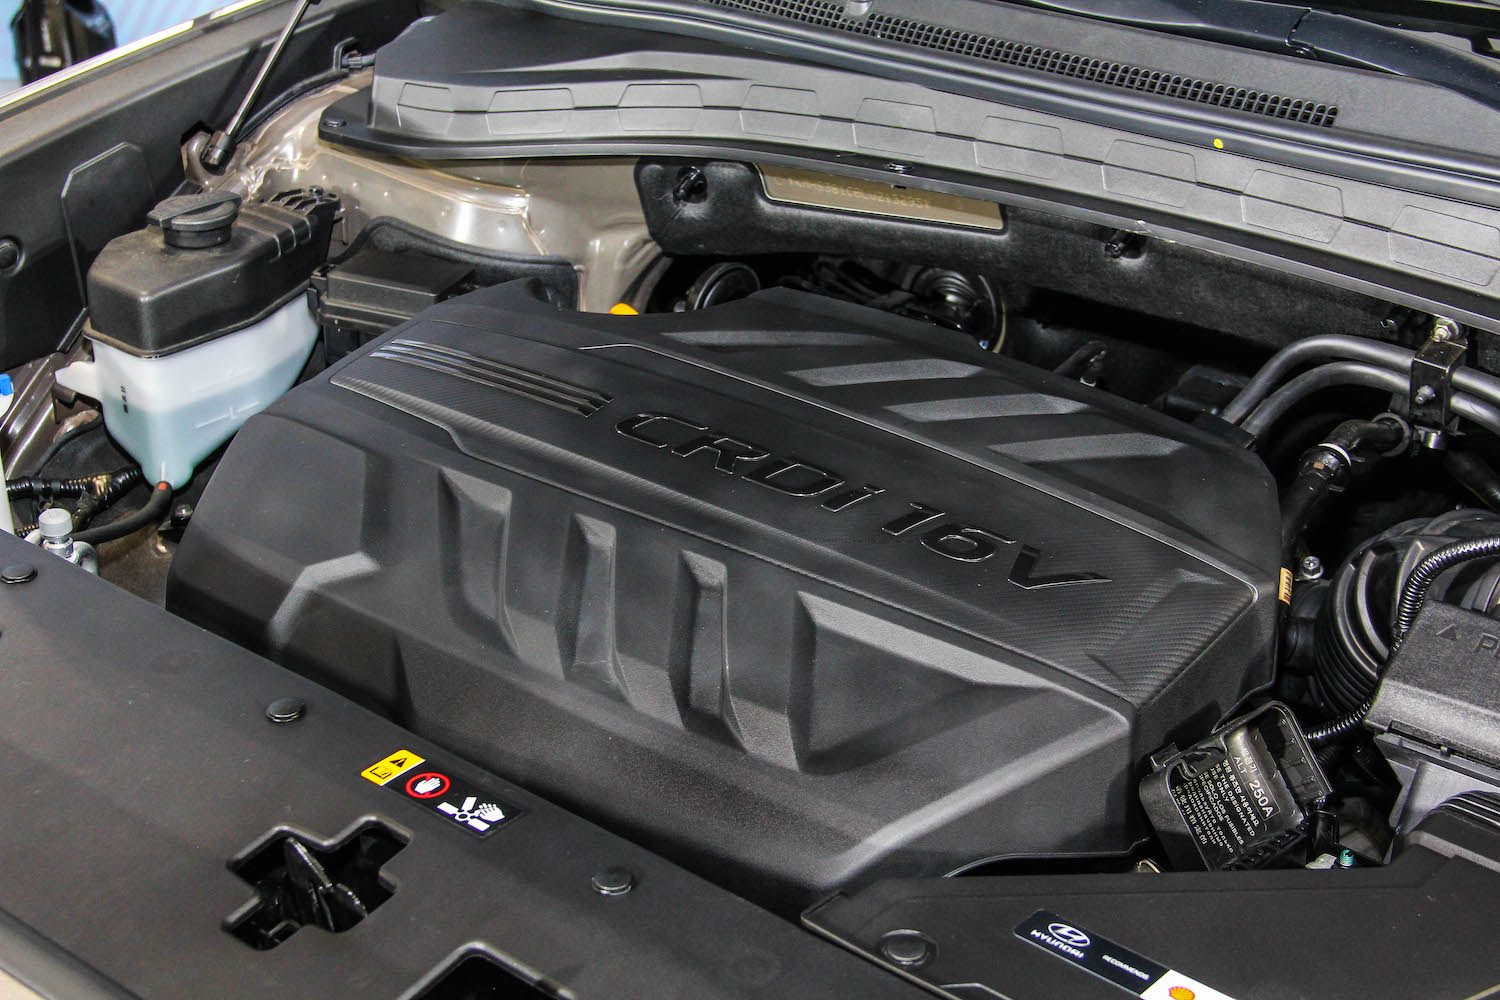 2.2L CRDi 柴油引擎，具備 200ps 最大馬力與 44.9kgm 峰值扭力。